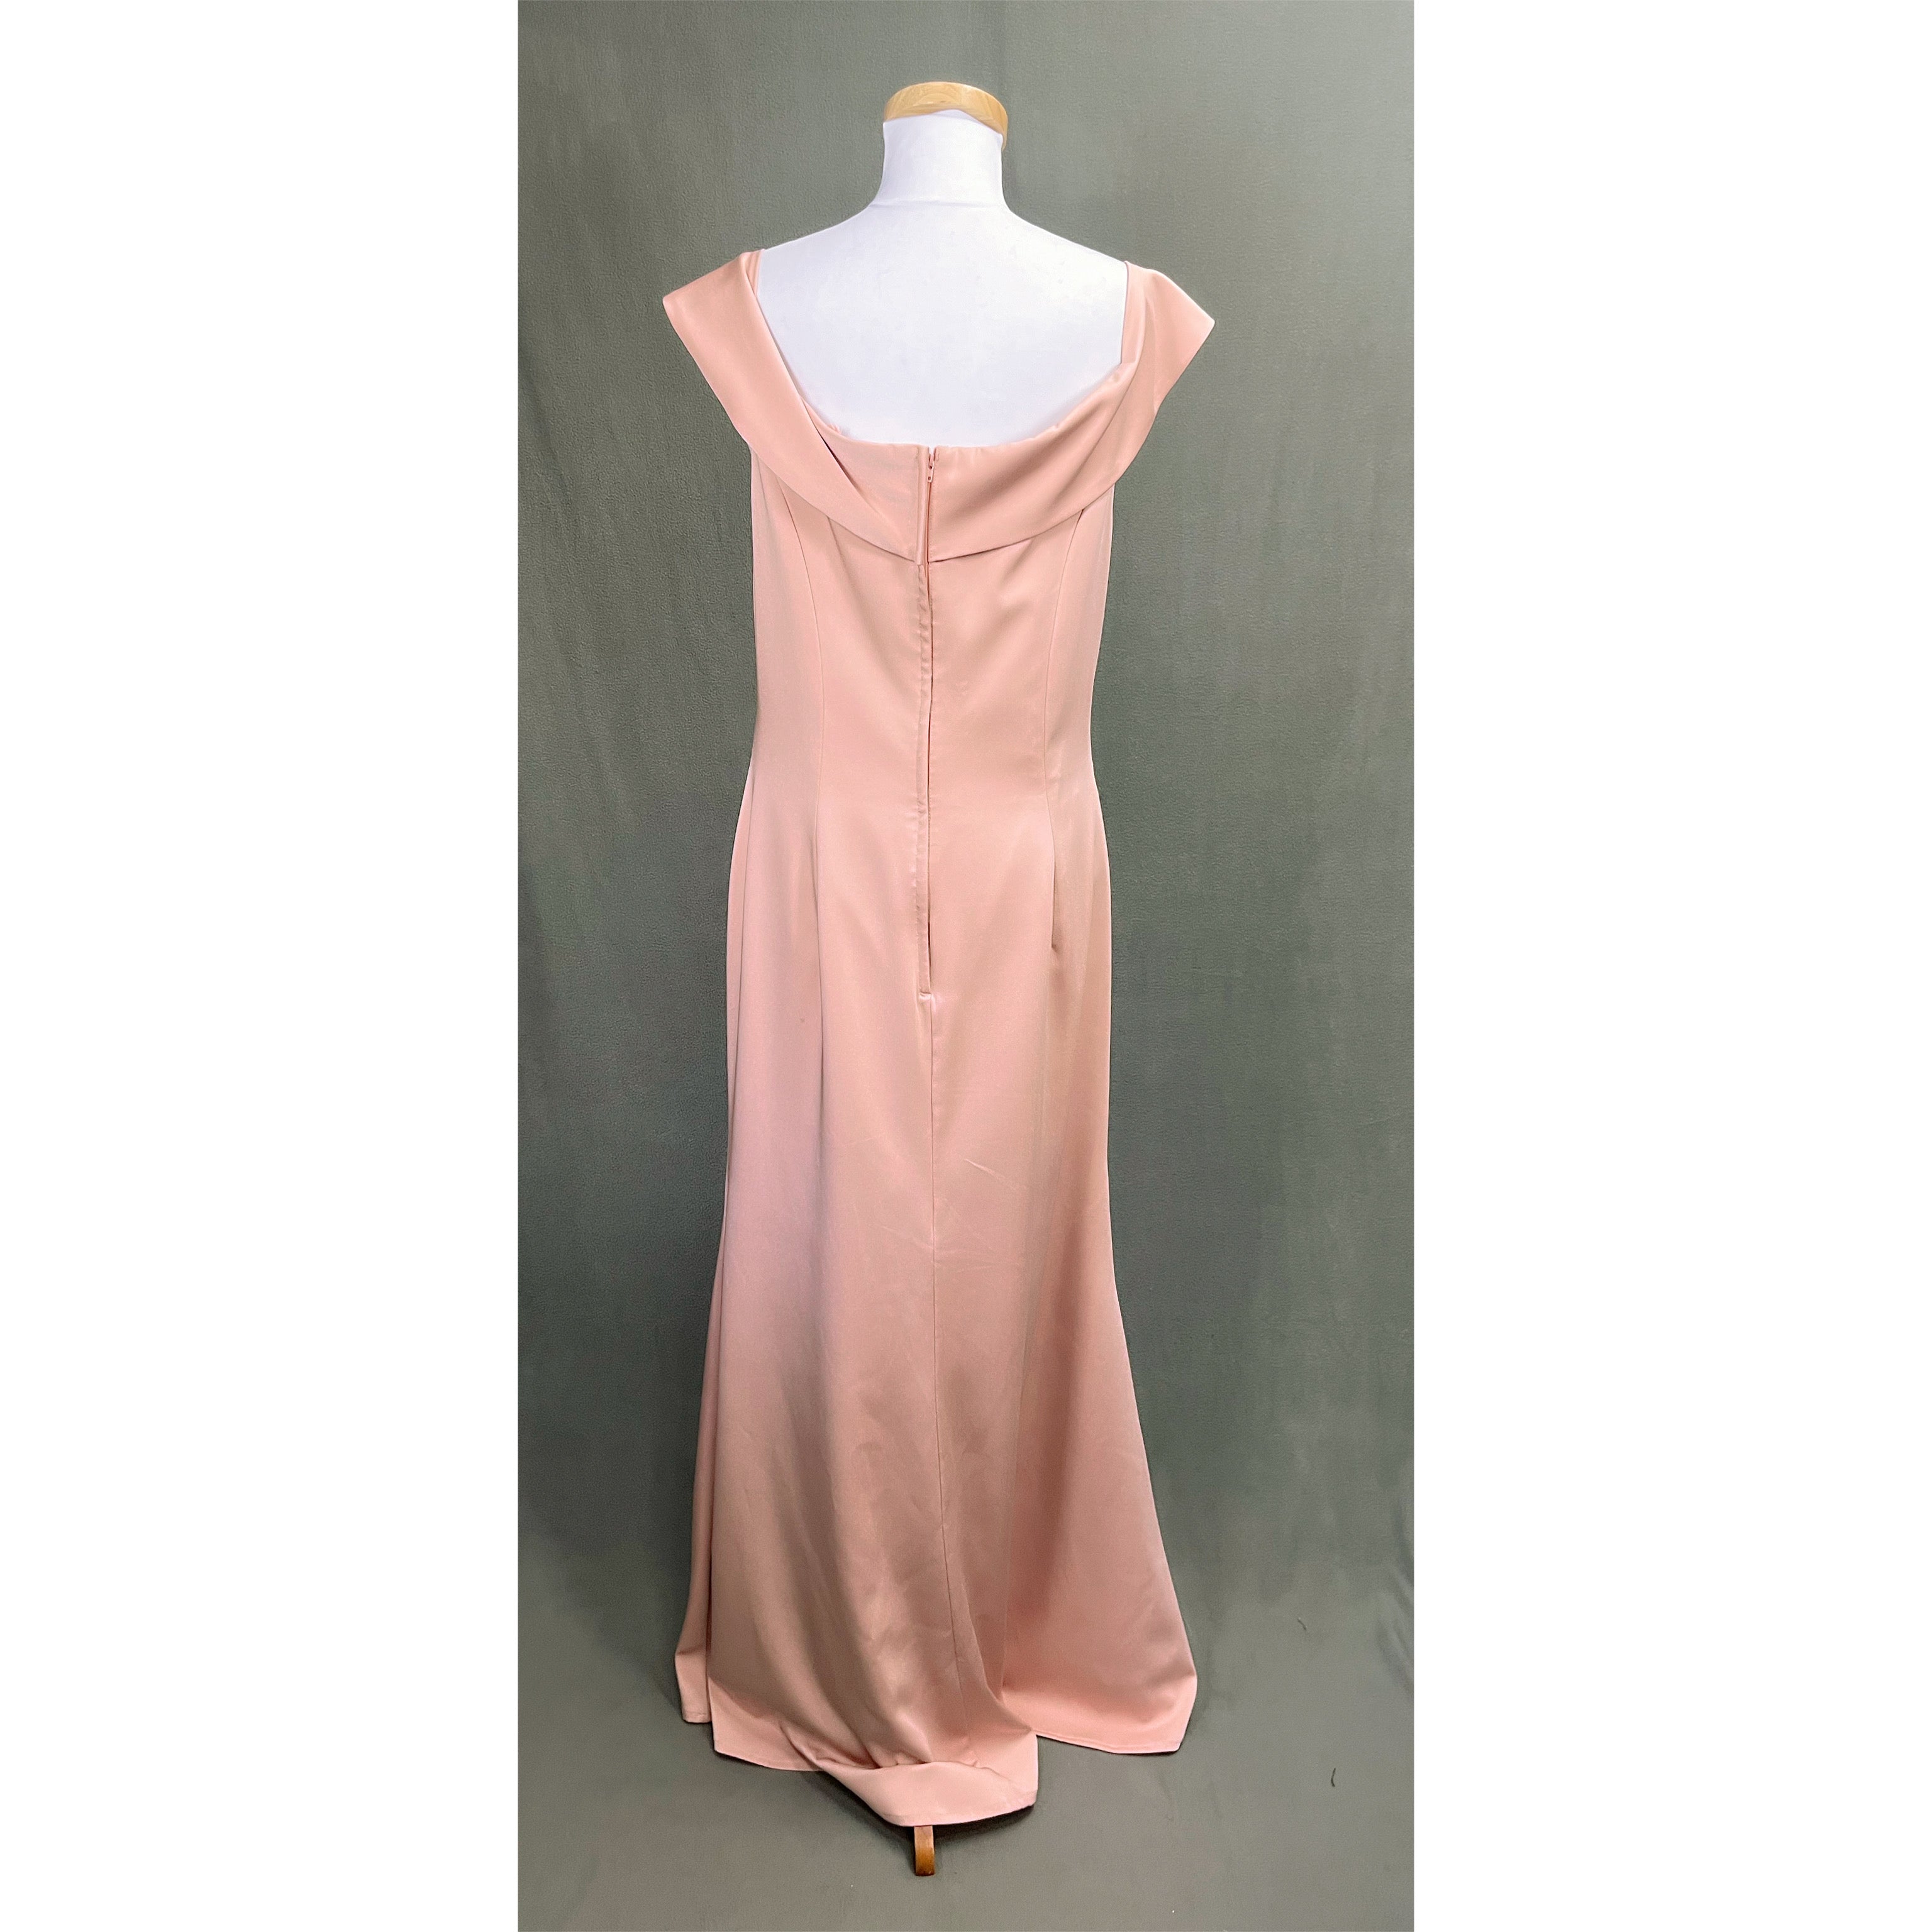 Allure blush dress, size 16